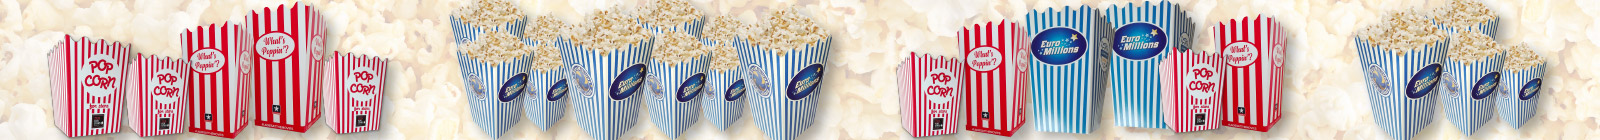 Bedrukte popcorndoosjes. Popcorn bakjes kopen popcorn doosjes bestellen met eigen logo of ontwerp